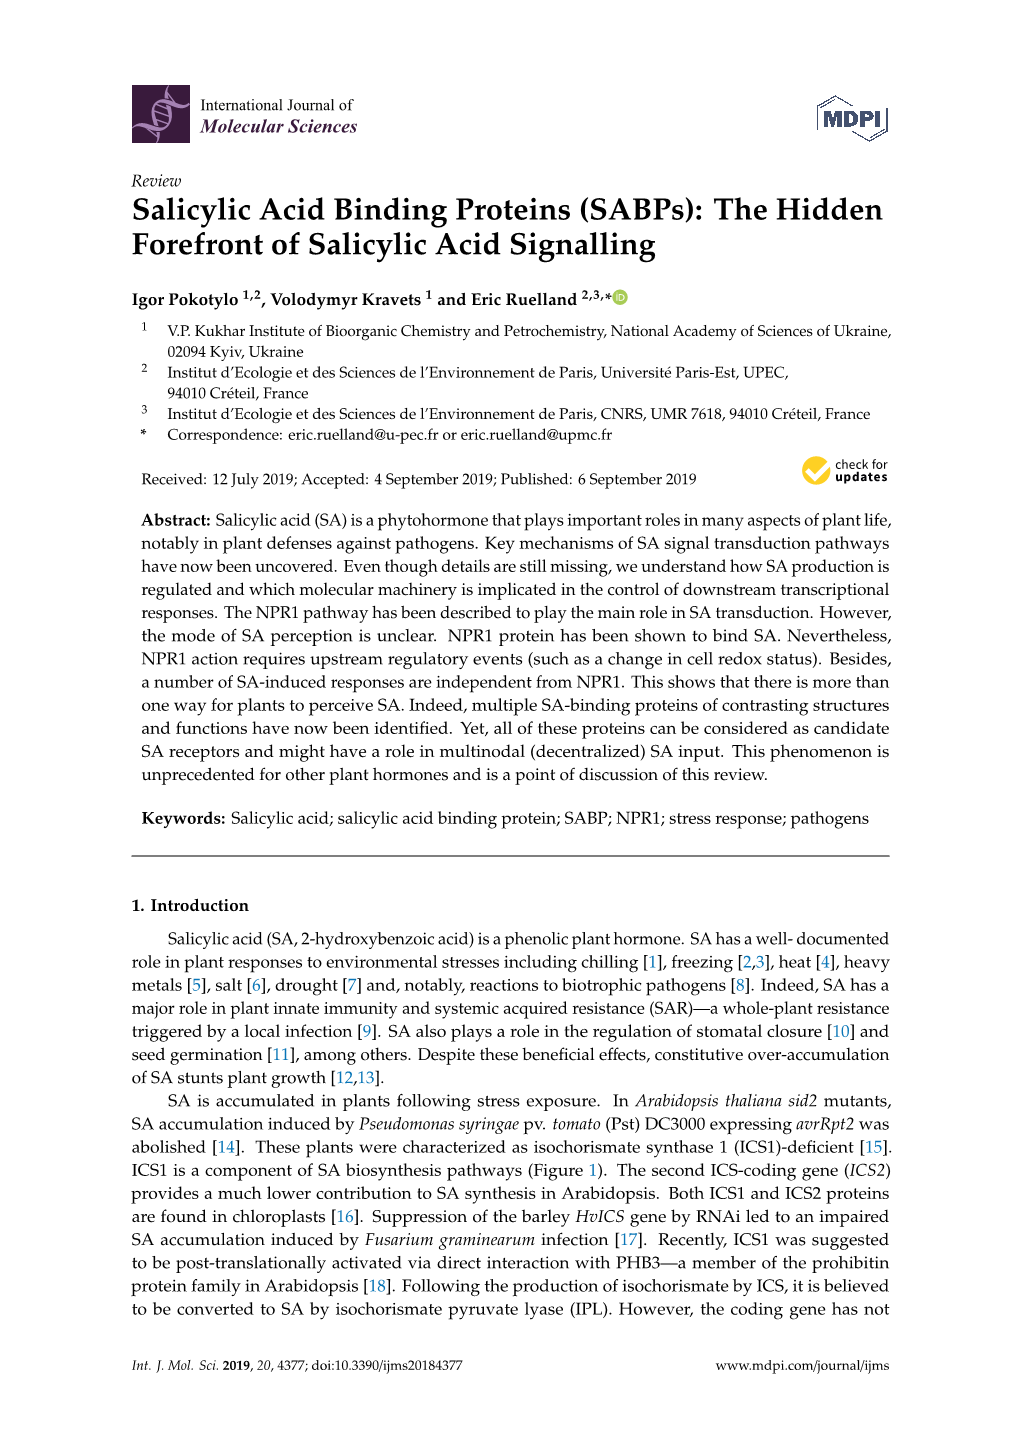 Salicylic Acid Binding Proteins (Sabps): the Hidden Forefront of Salicylic Acid Signalling